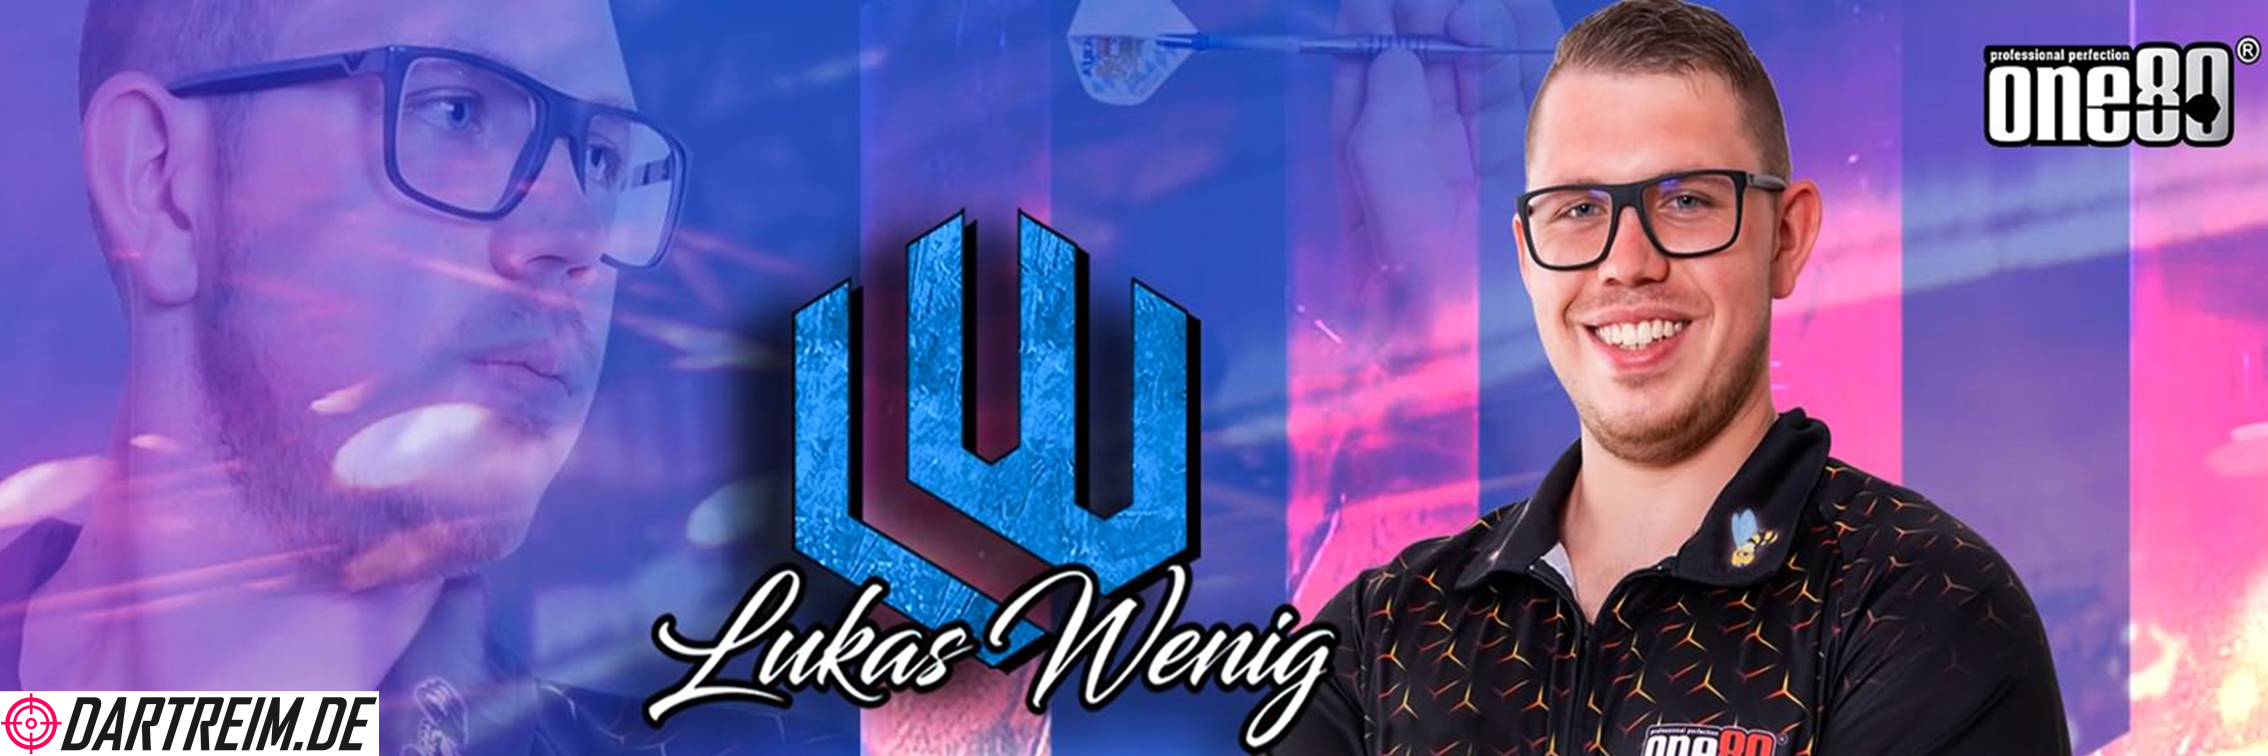 Lukas-Wenig-Banner